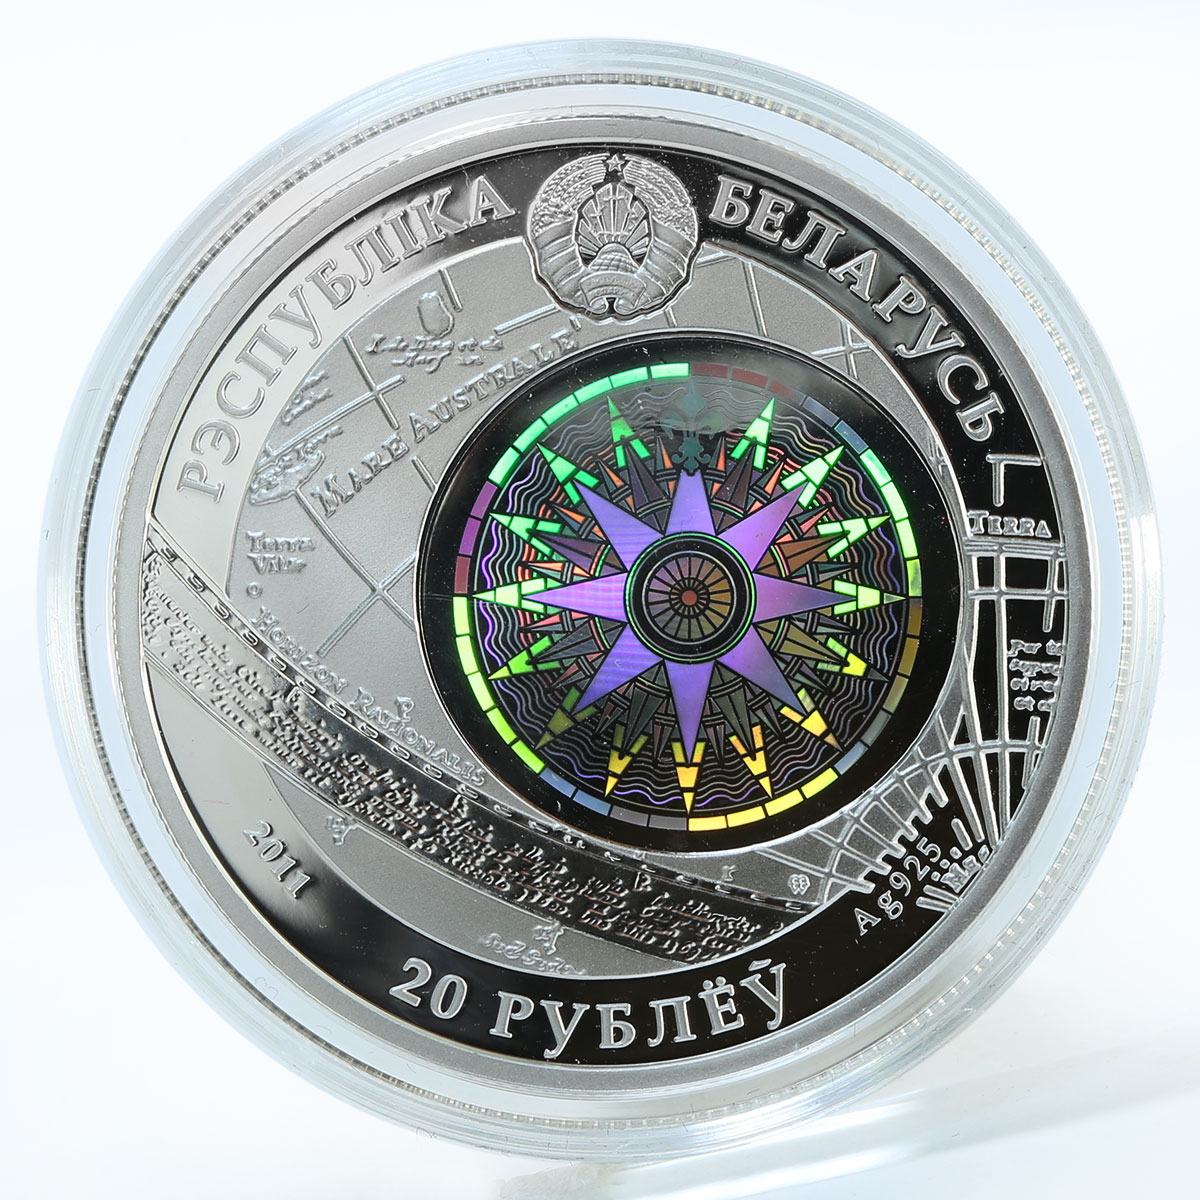 Belarus 20 roubles Kruzenstern Sailing Ships hologram silver coin 2011